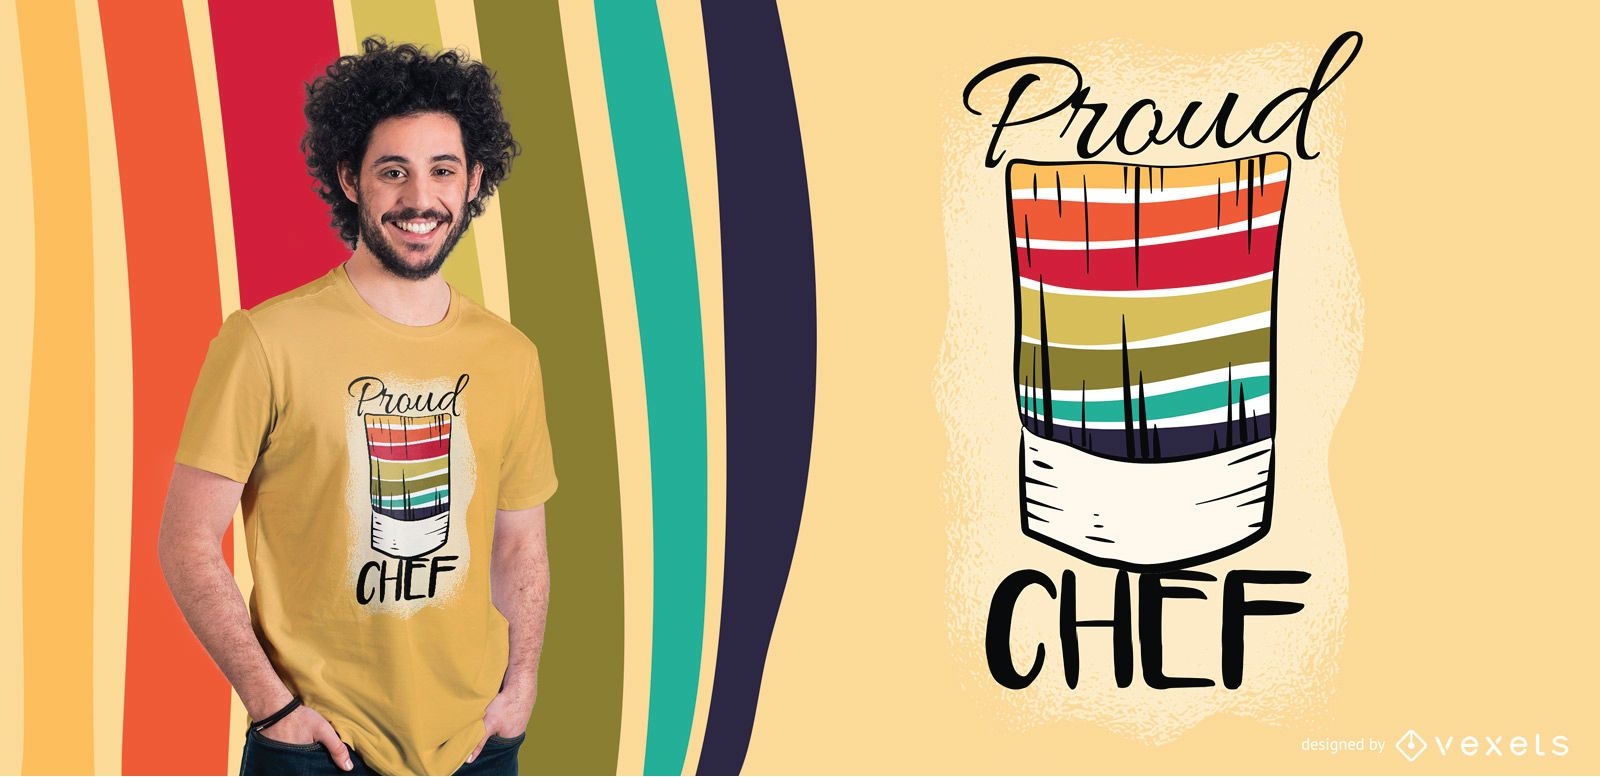 Proud Chef rainbow t-shirt design